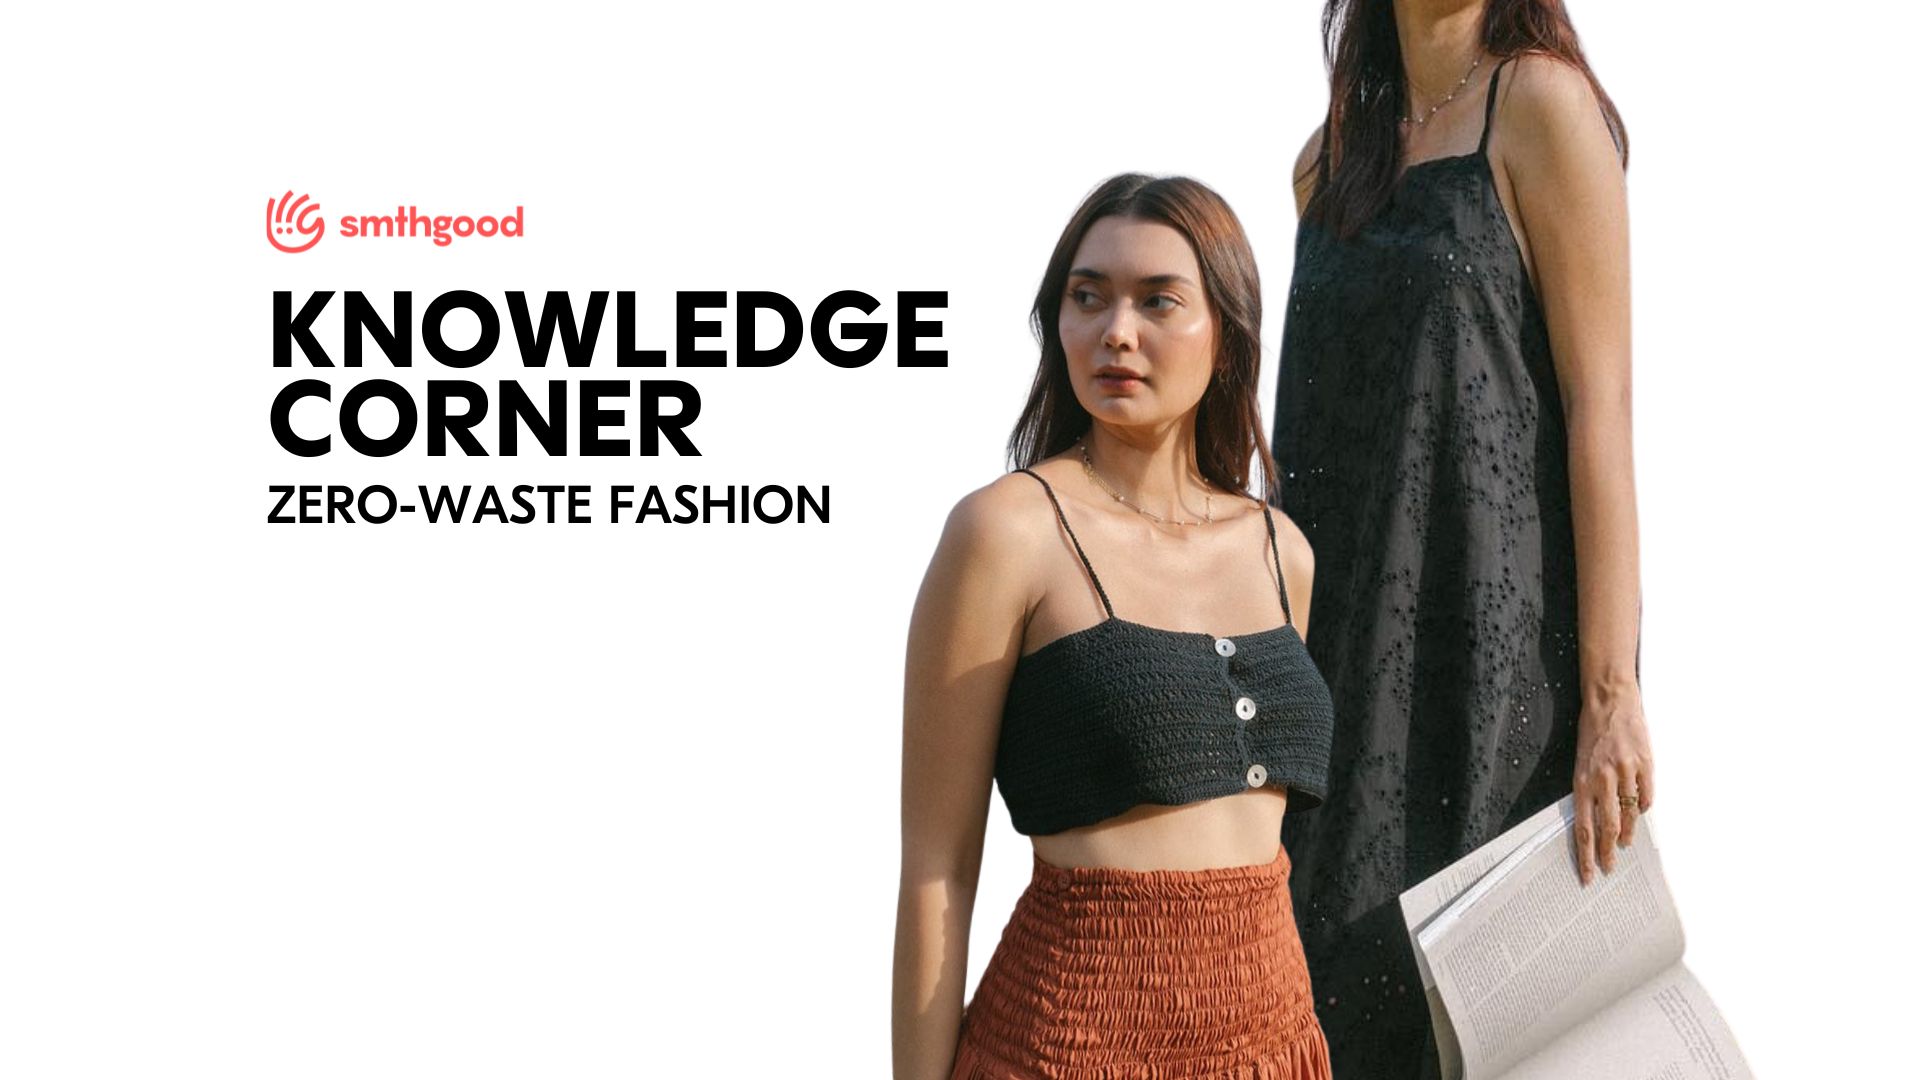 What Is Zero-Waste Fashion?